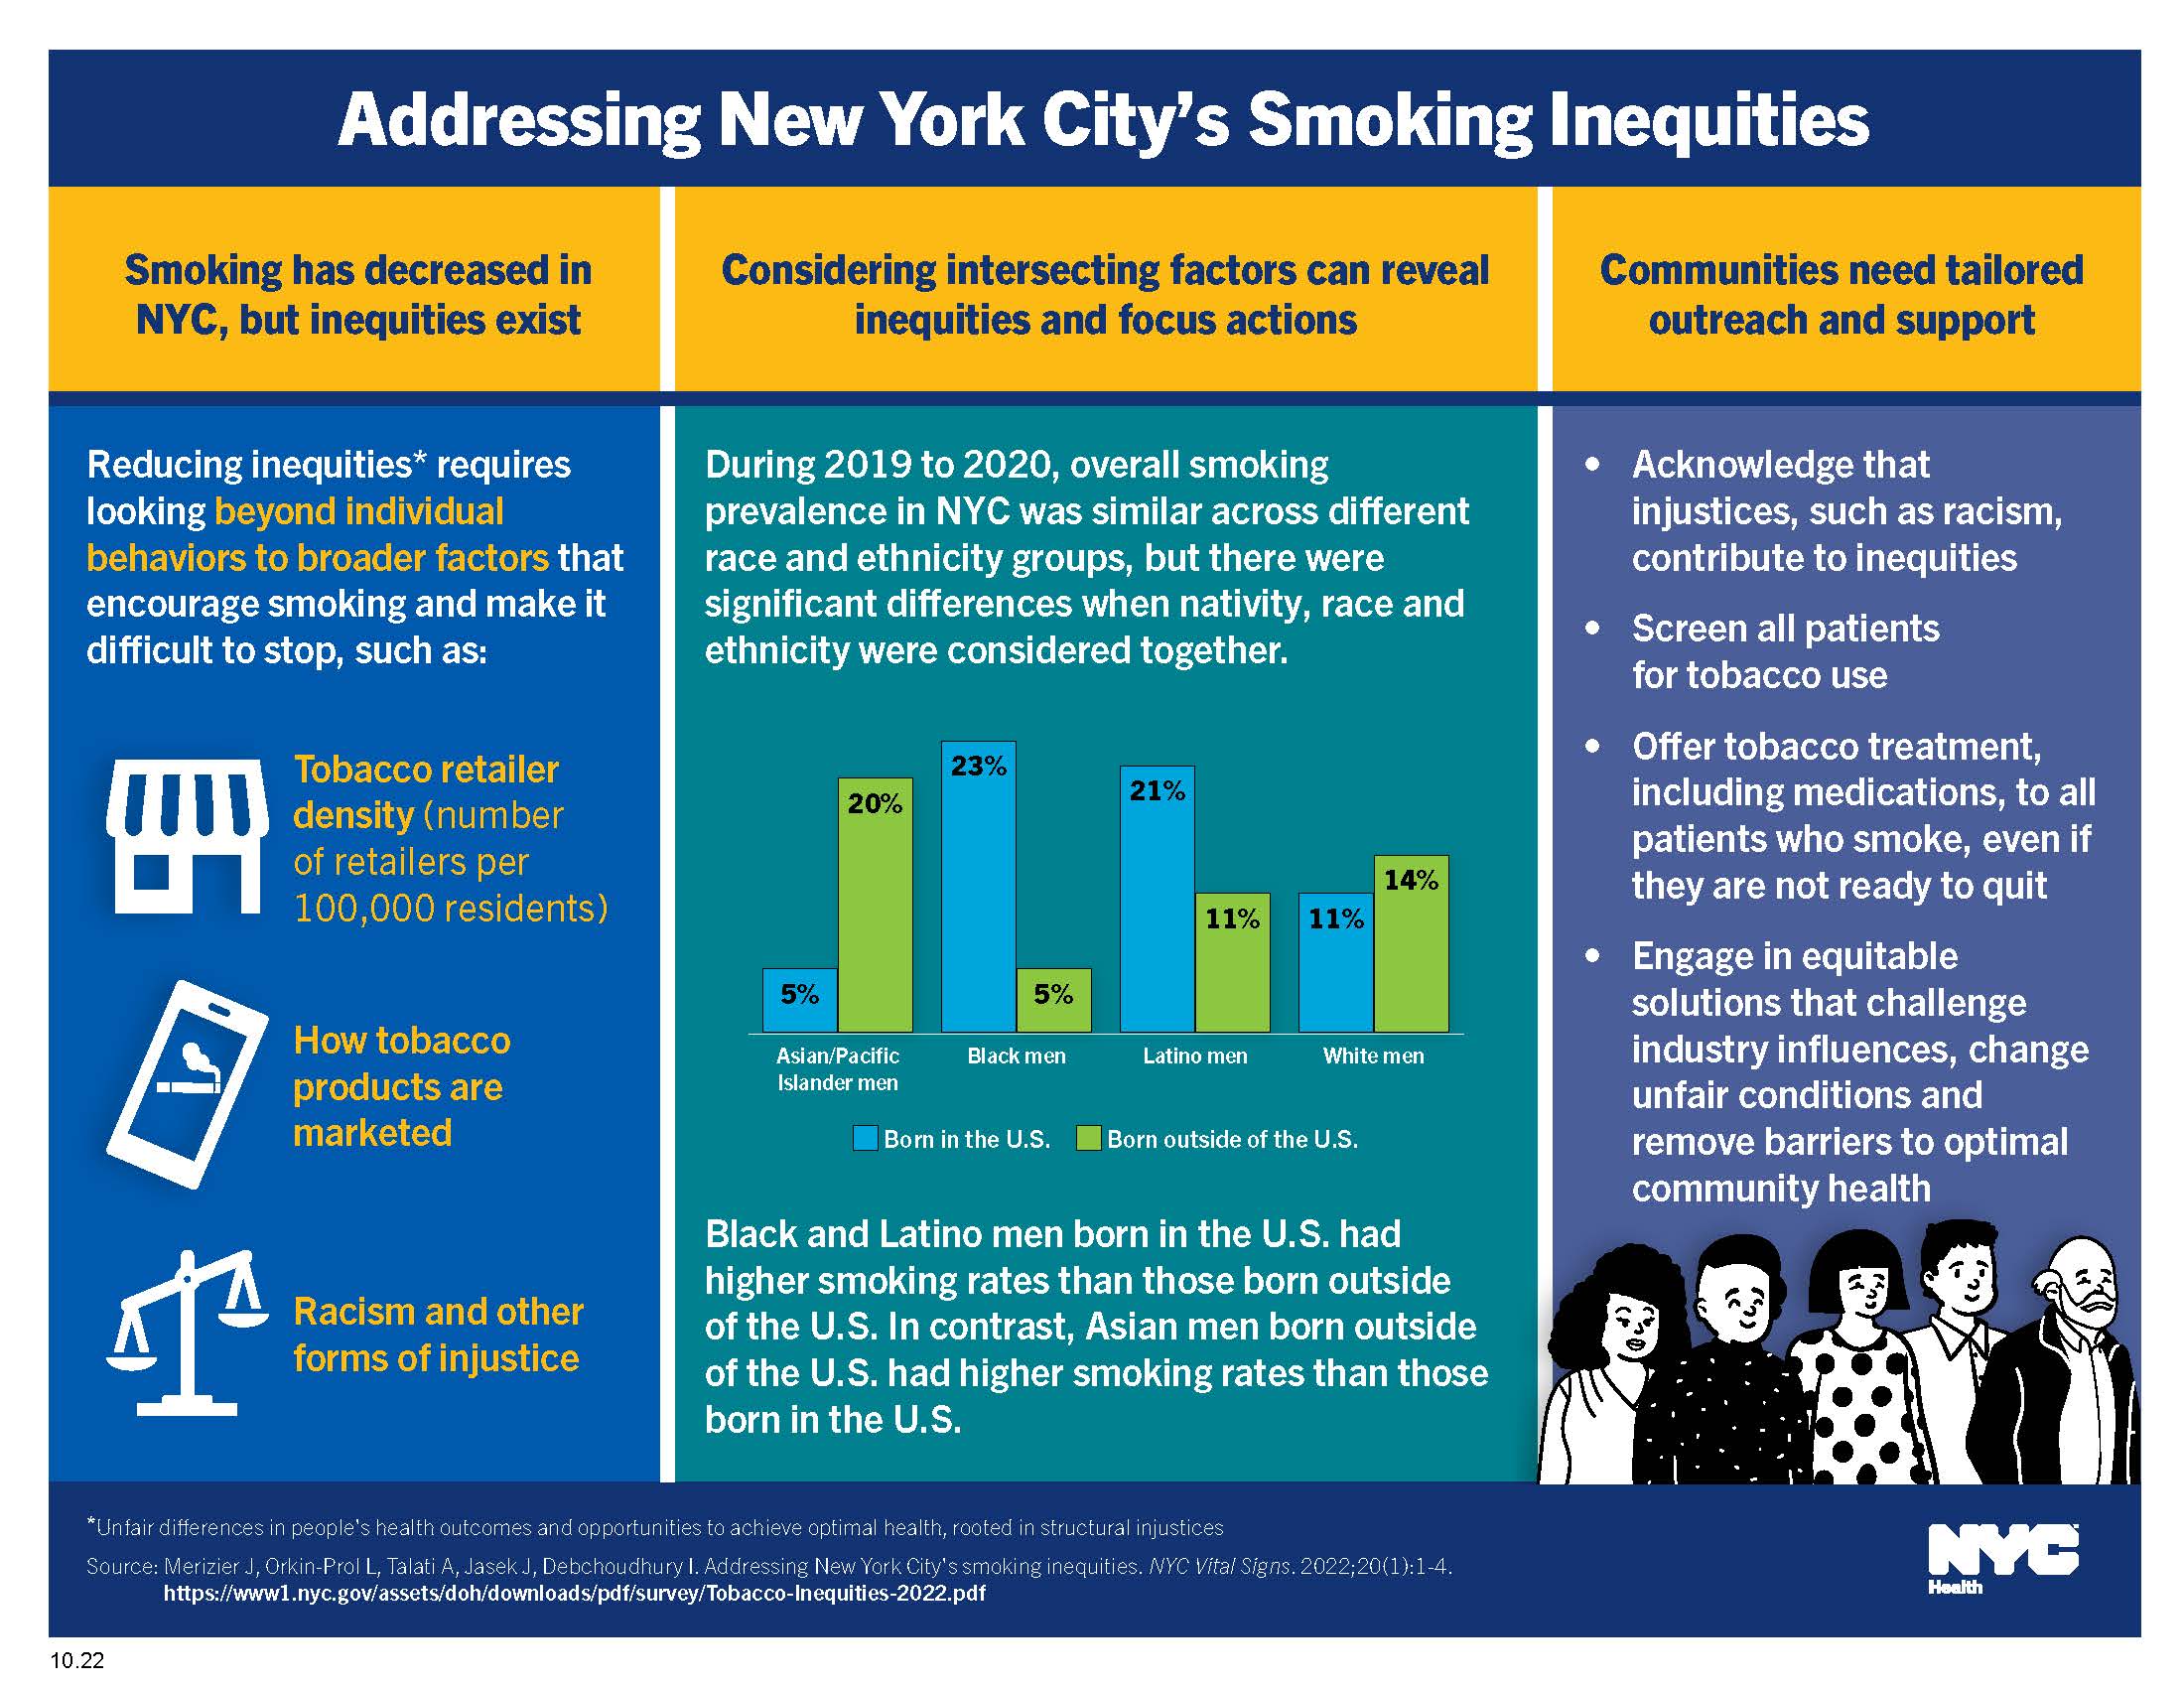 An infographics image addressing New York City's smoking inequities.